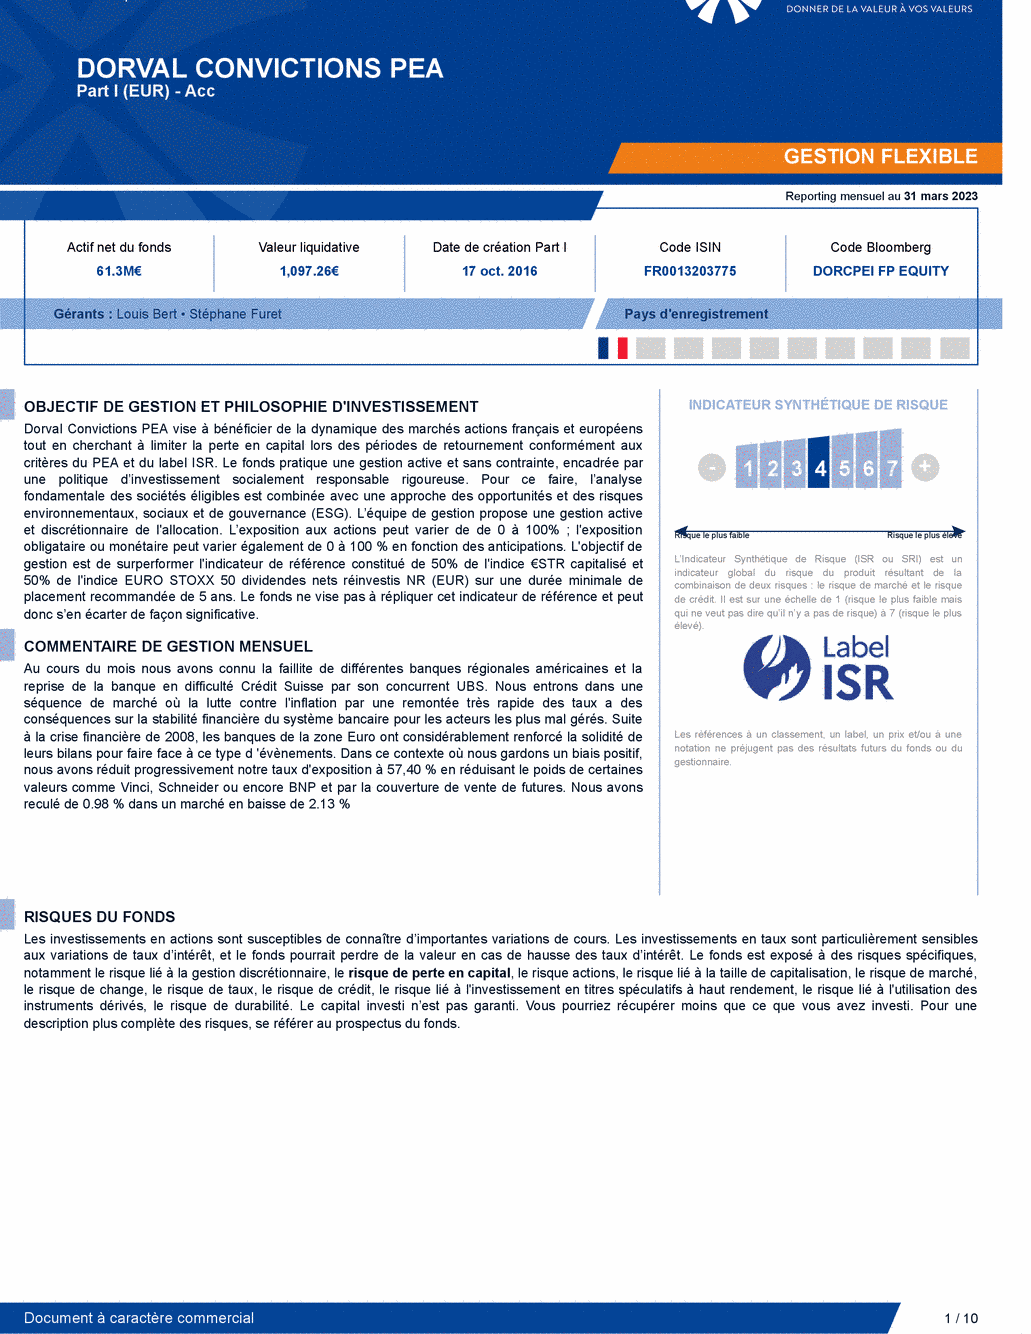 Reporting DORVAL CONVICTIONS PEA Part I - 31/03/2023 - Français